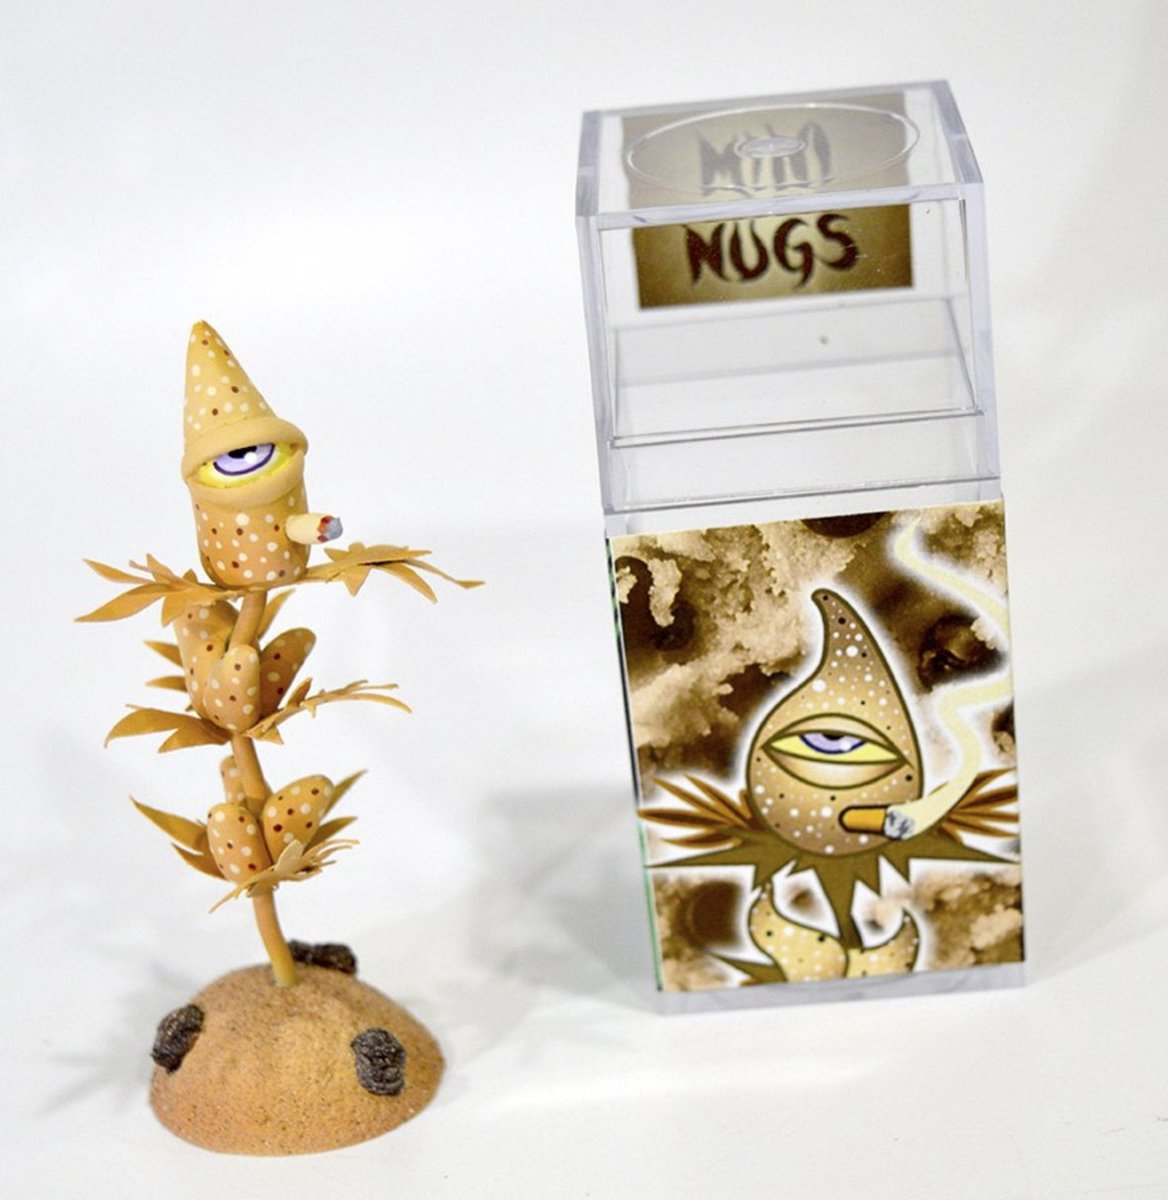 sprayedpaint.com/products/cooki…
Cookie Dough Mini Nugs Sculpture by Nugg Life NY
#sculpture #artsculpture #ArtStatue #PopArtSculpture #GraffitiSculpture #art #graffiti #streetart #Brown #Cannabis Marijuana & Weed #Cookie #Cough #Dank #Dope #Drug #Eating #Figure #Flowers & Plants #Food...